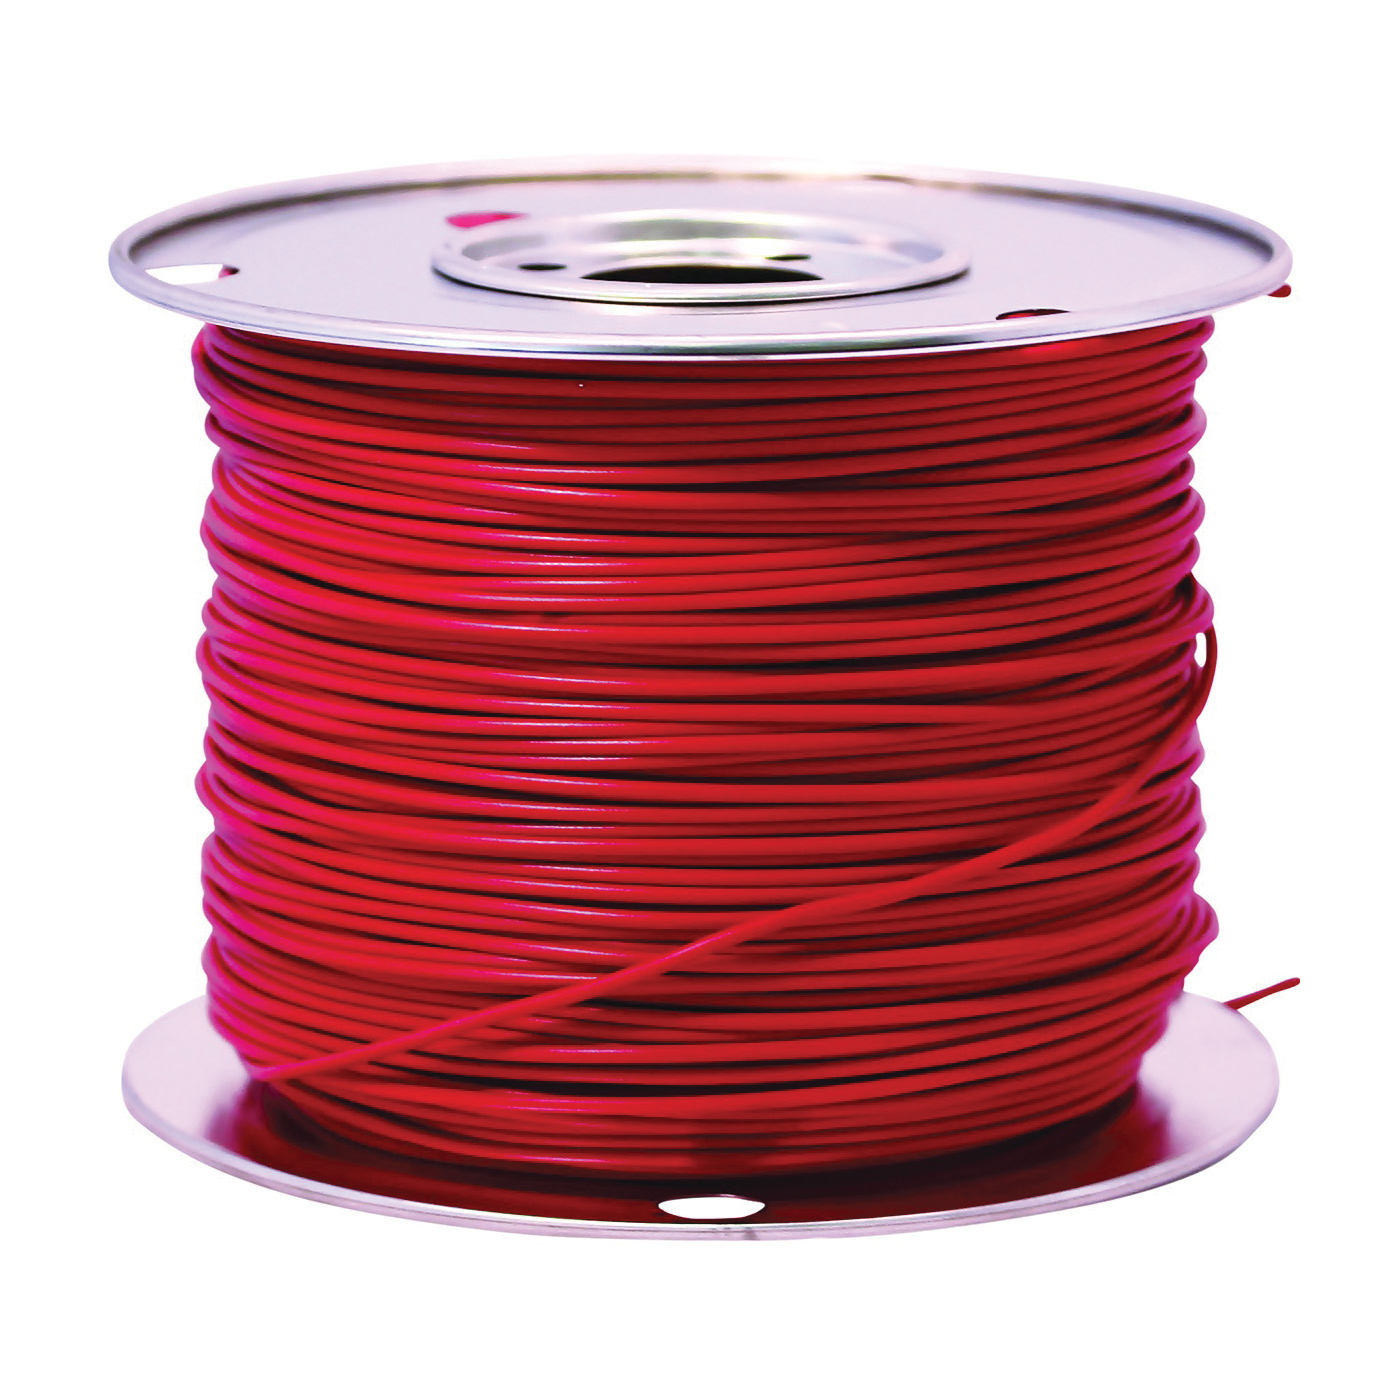 CCI 55668023 Primary Wire, 16 AWG Wire, 1-Conductor, 60 VDC, Copper Conductor, Red Sheath - 1